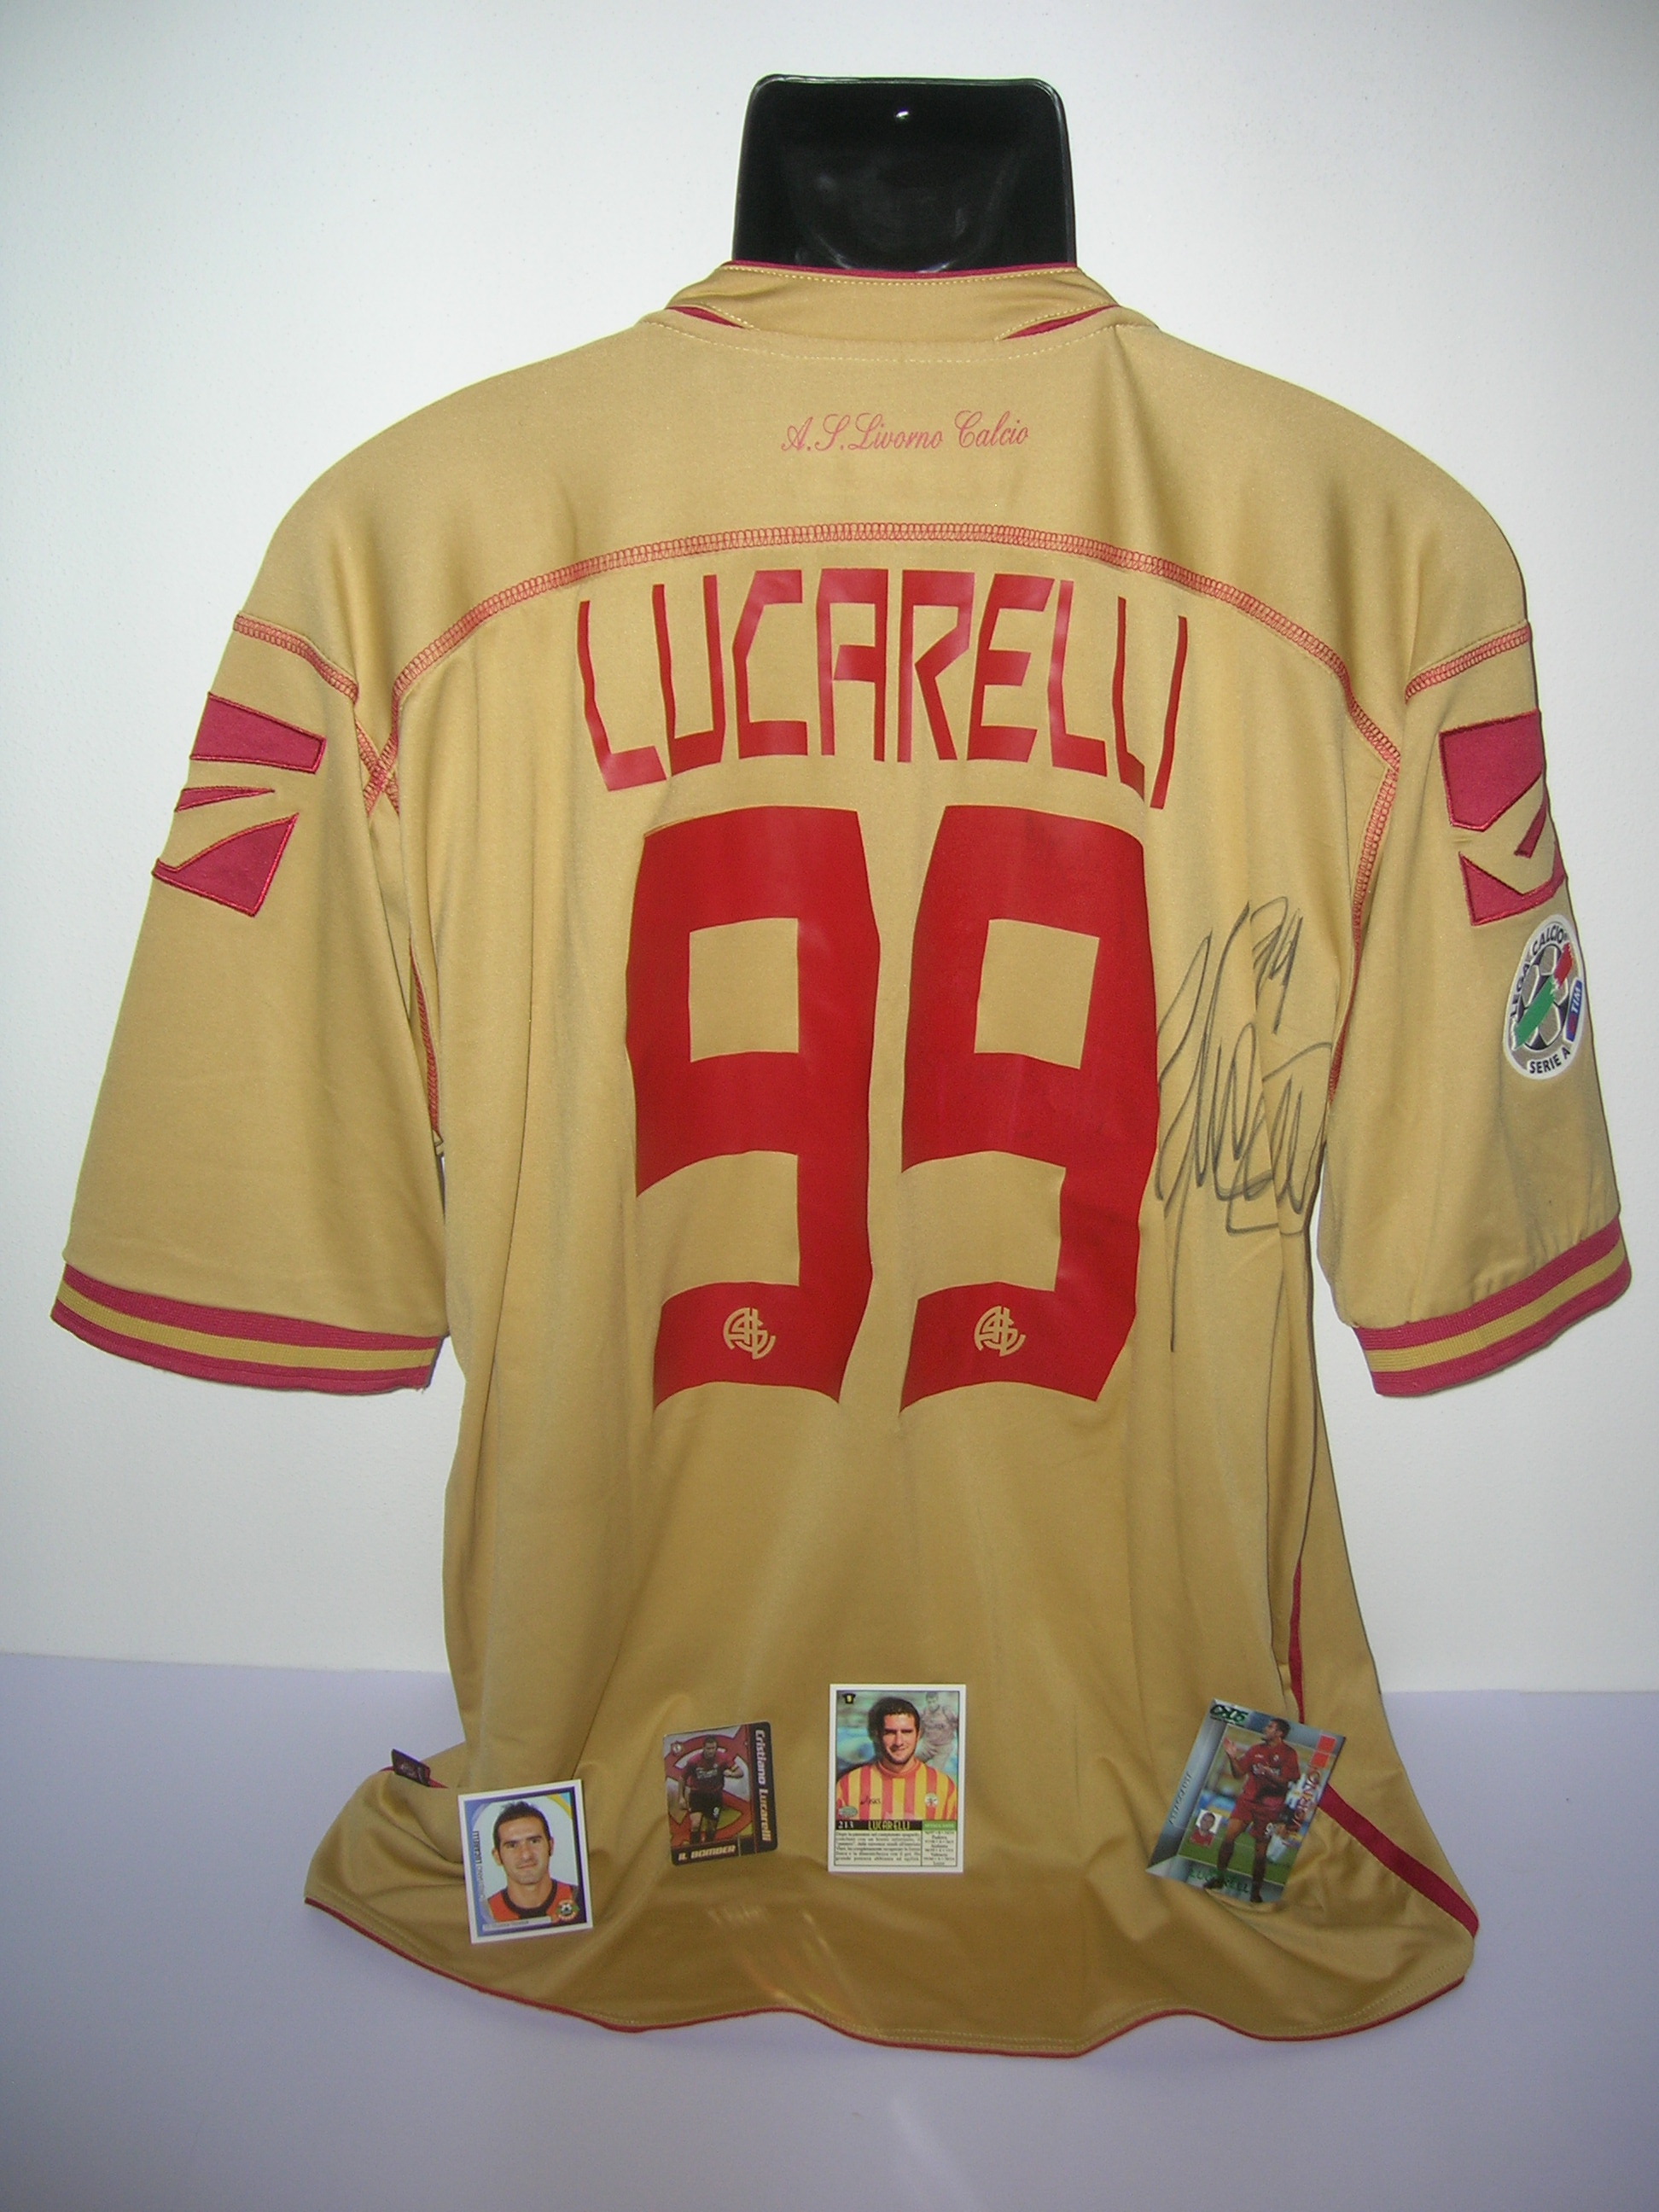 Livorno  Lucarelli  99  K-4